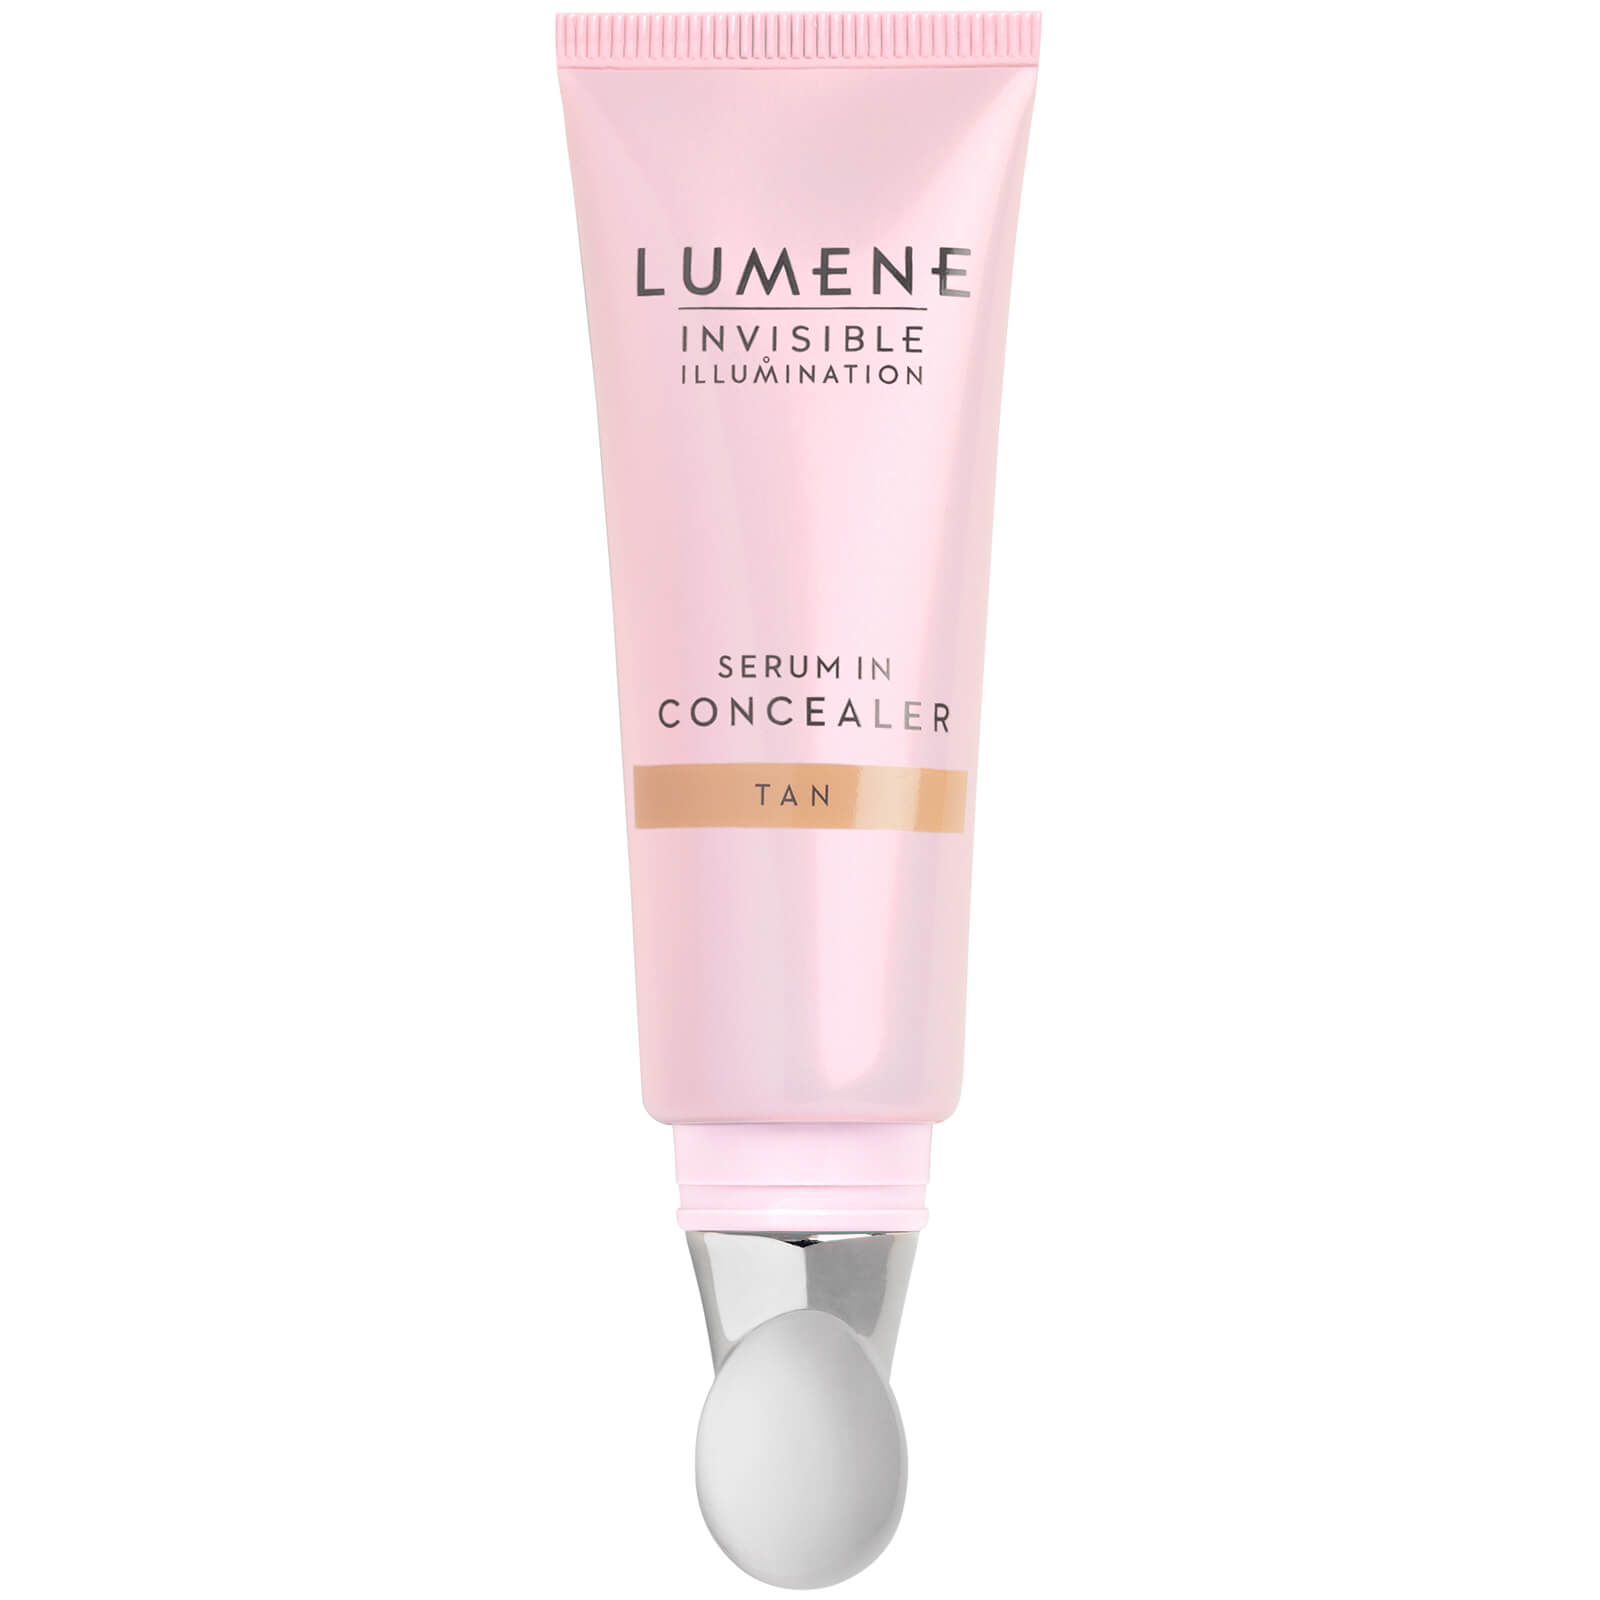 Lumene Invisible Illumination Serum In Concealer 10ml (various Shades) - Tan In White